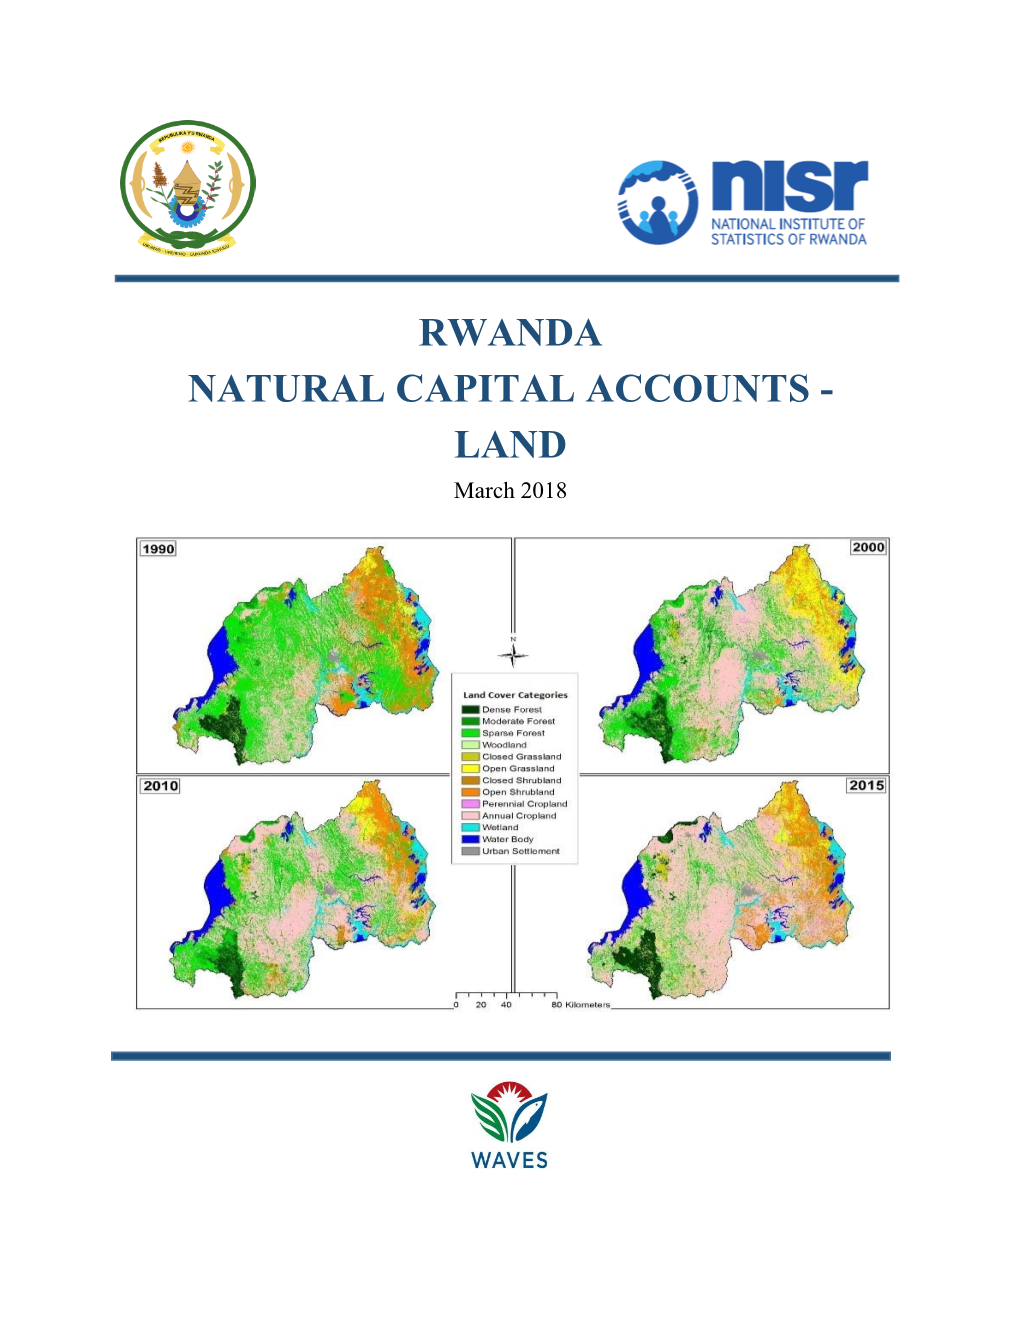 Rwanda NCA Land Accounts 2018